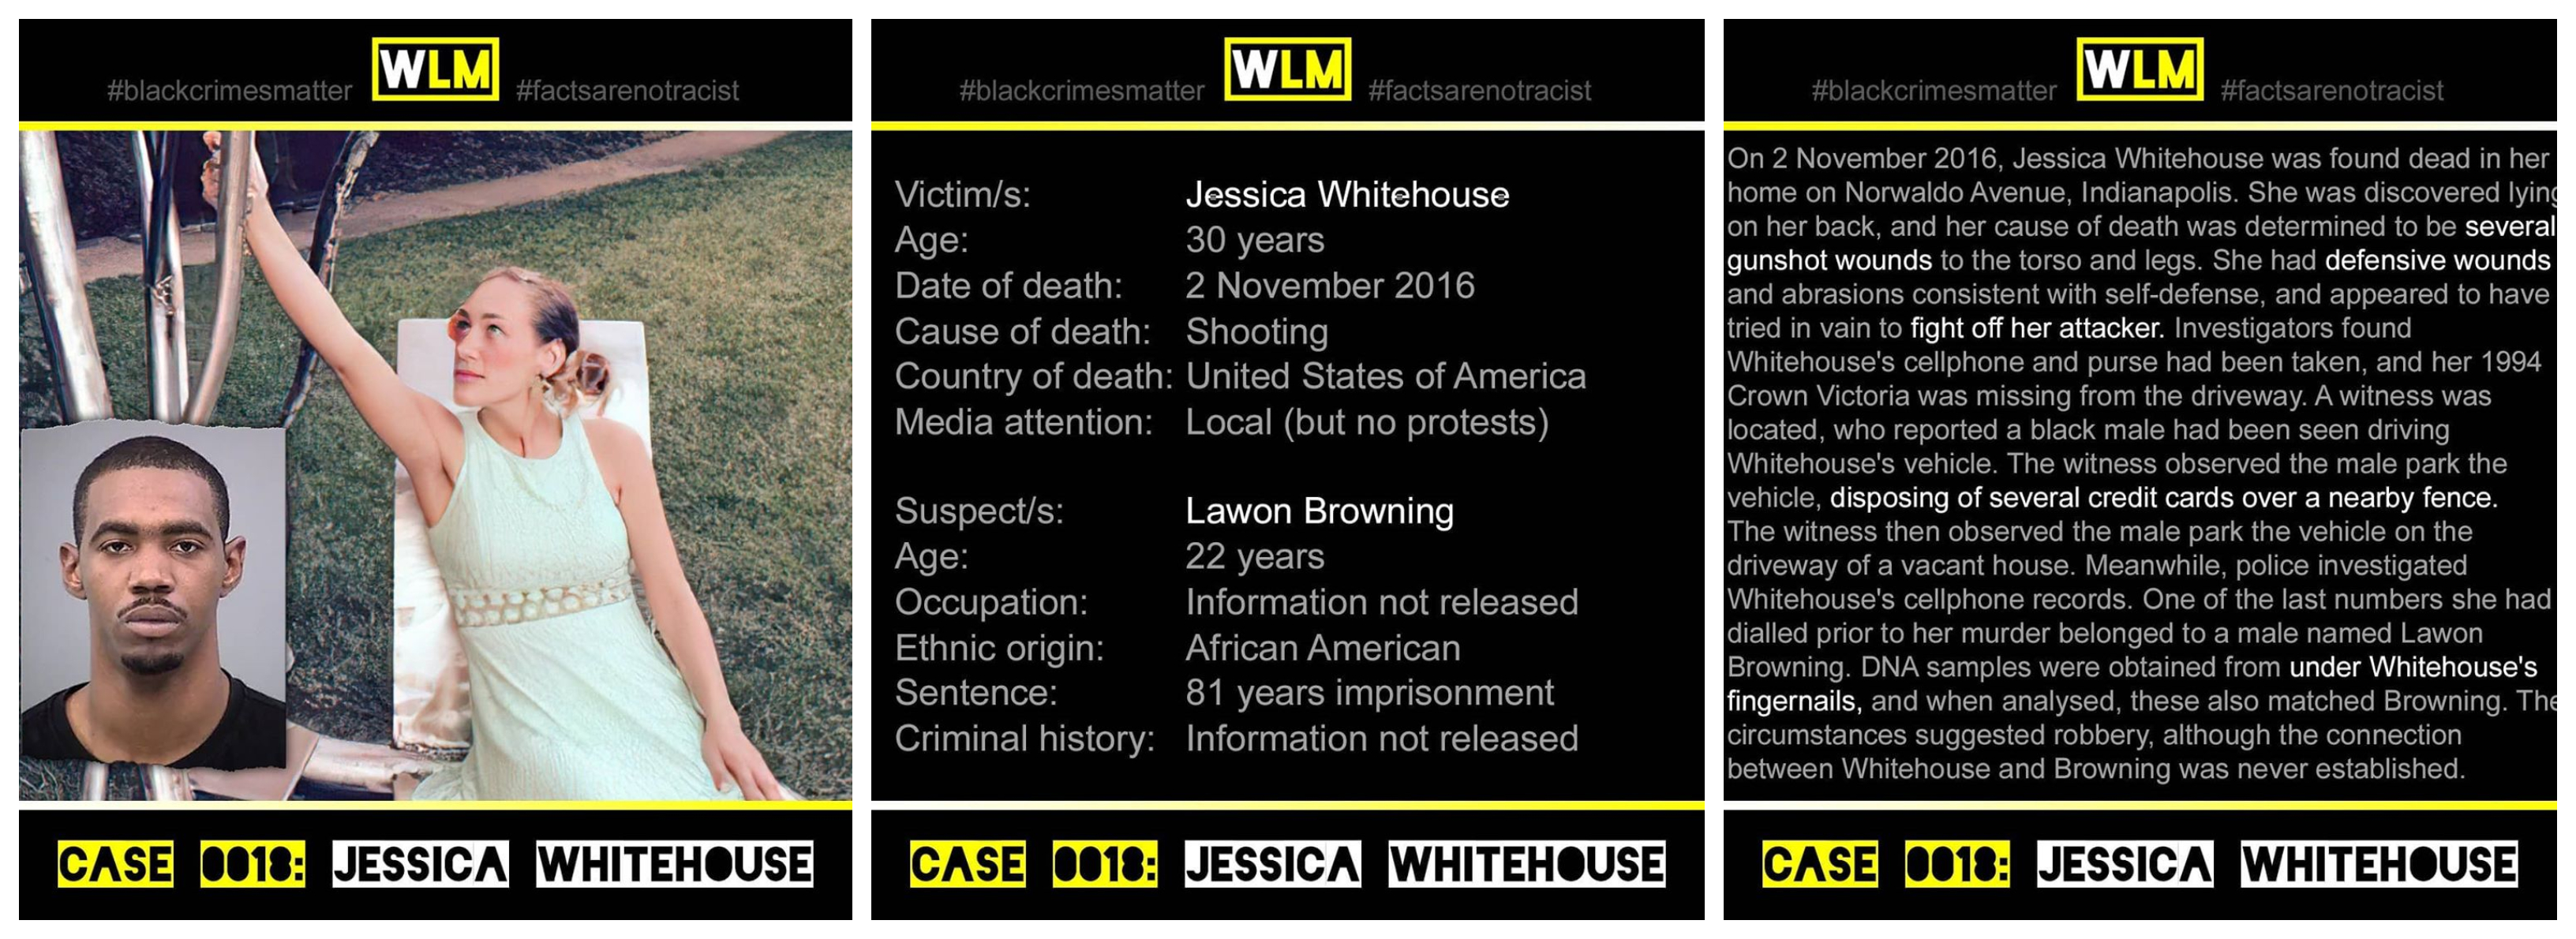 case-018-jessica-whitehouse